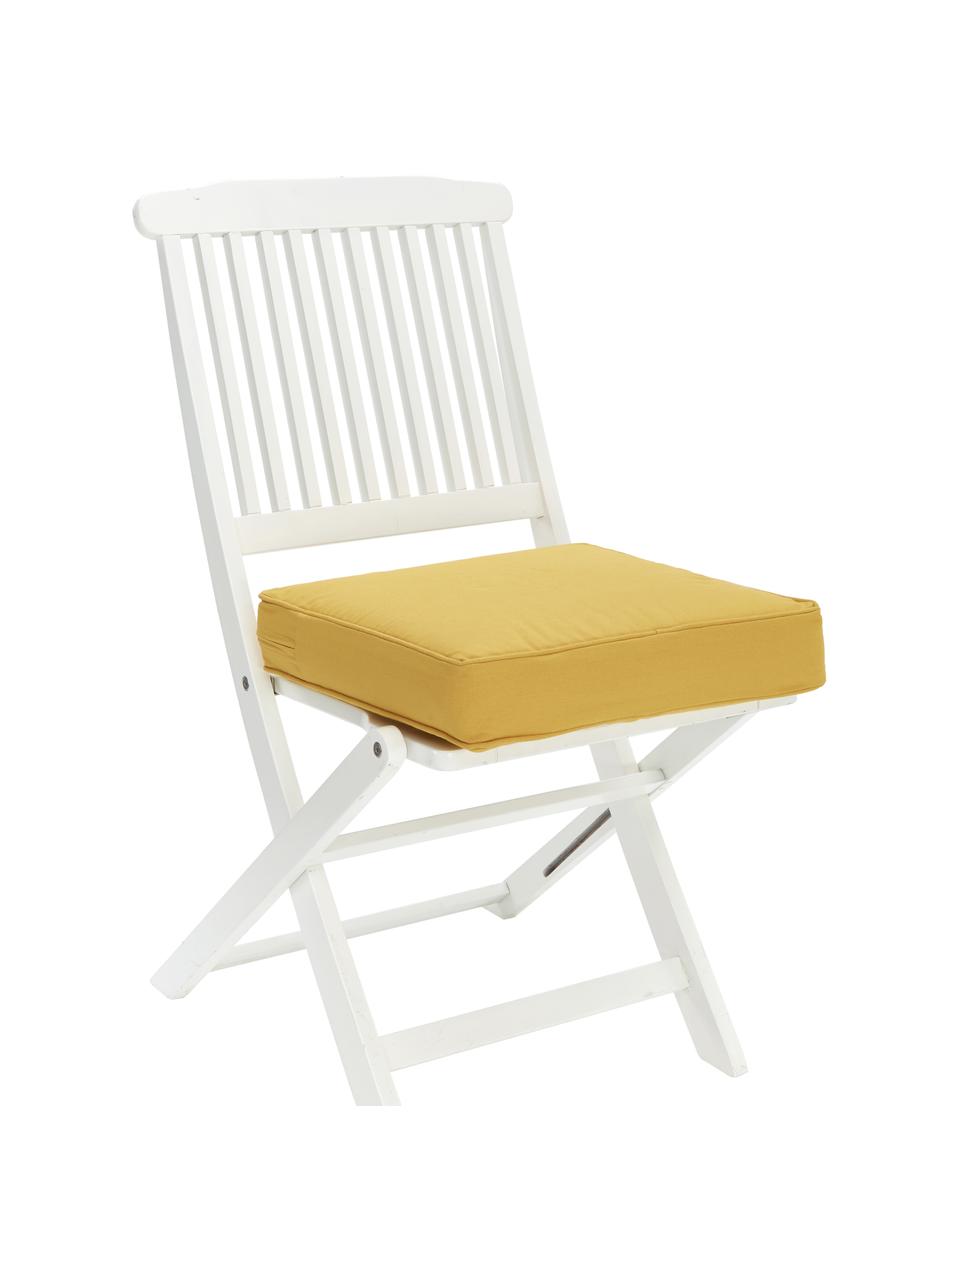 Cuscino sedia alto in cotone giallo Zoey, Rivestimento: 100% cotone, Giallo, Larg. 40 x Lung. 40 cm